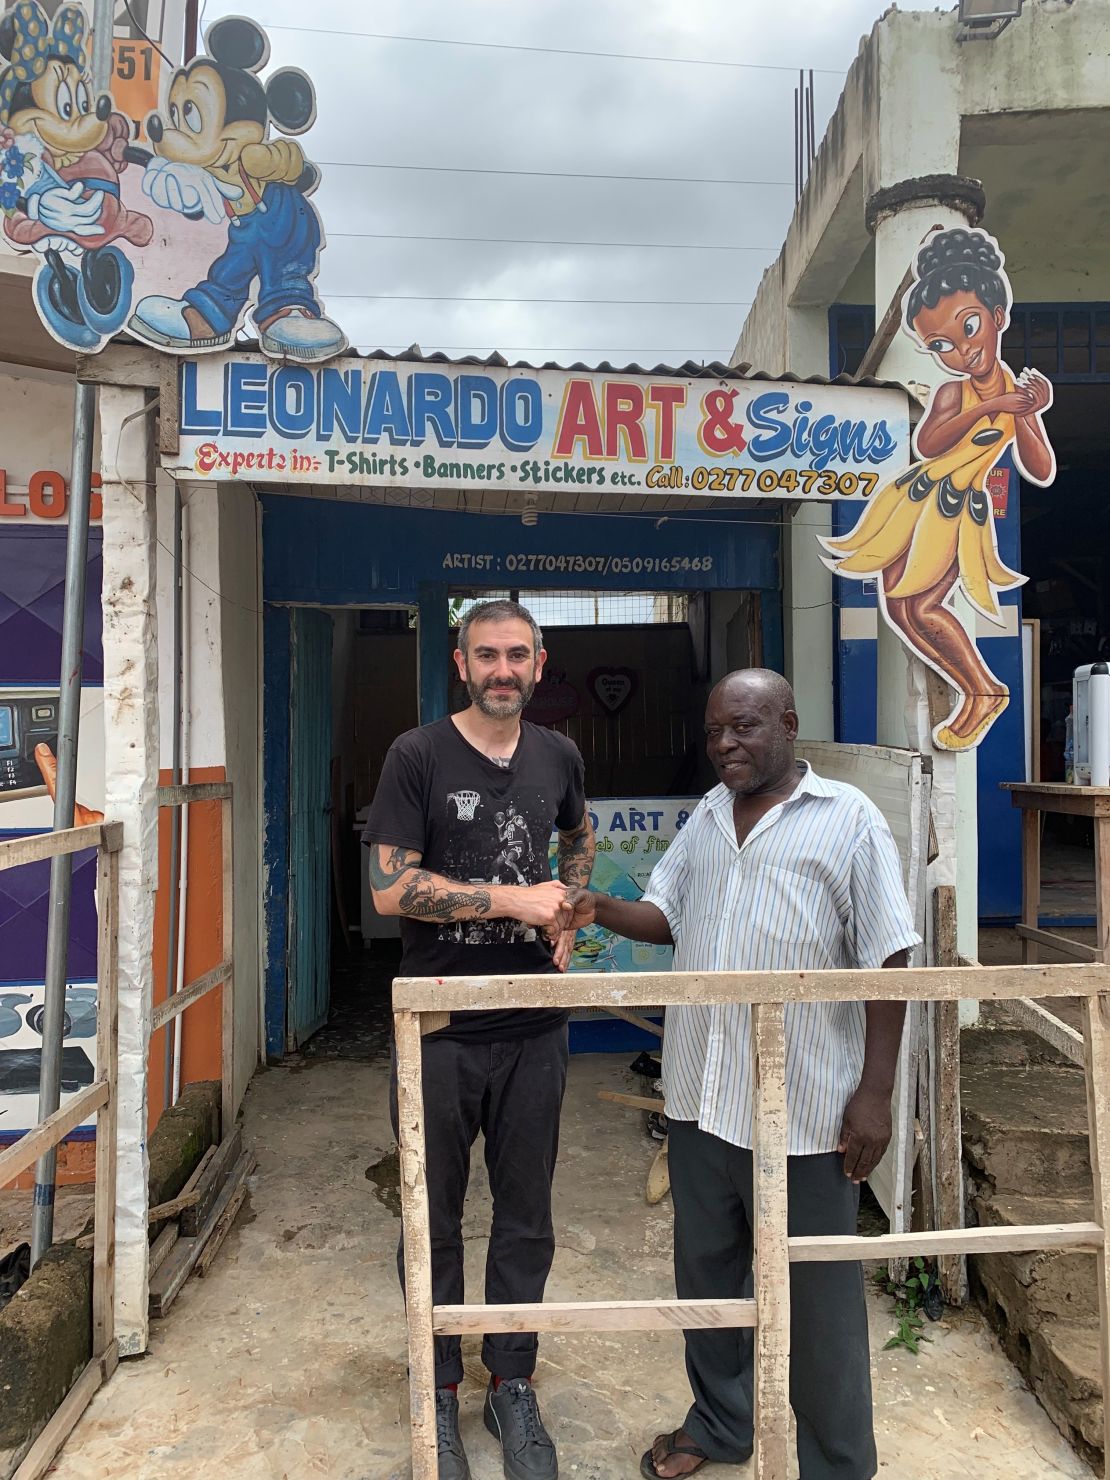 Brian Chankin with artist Leonardo.